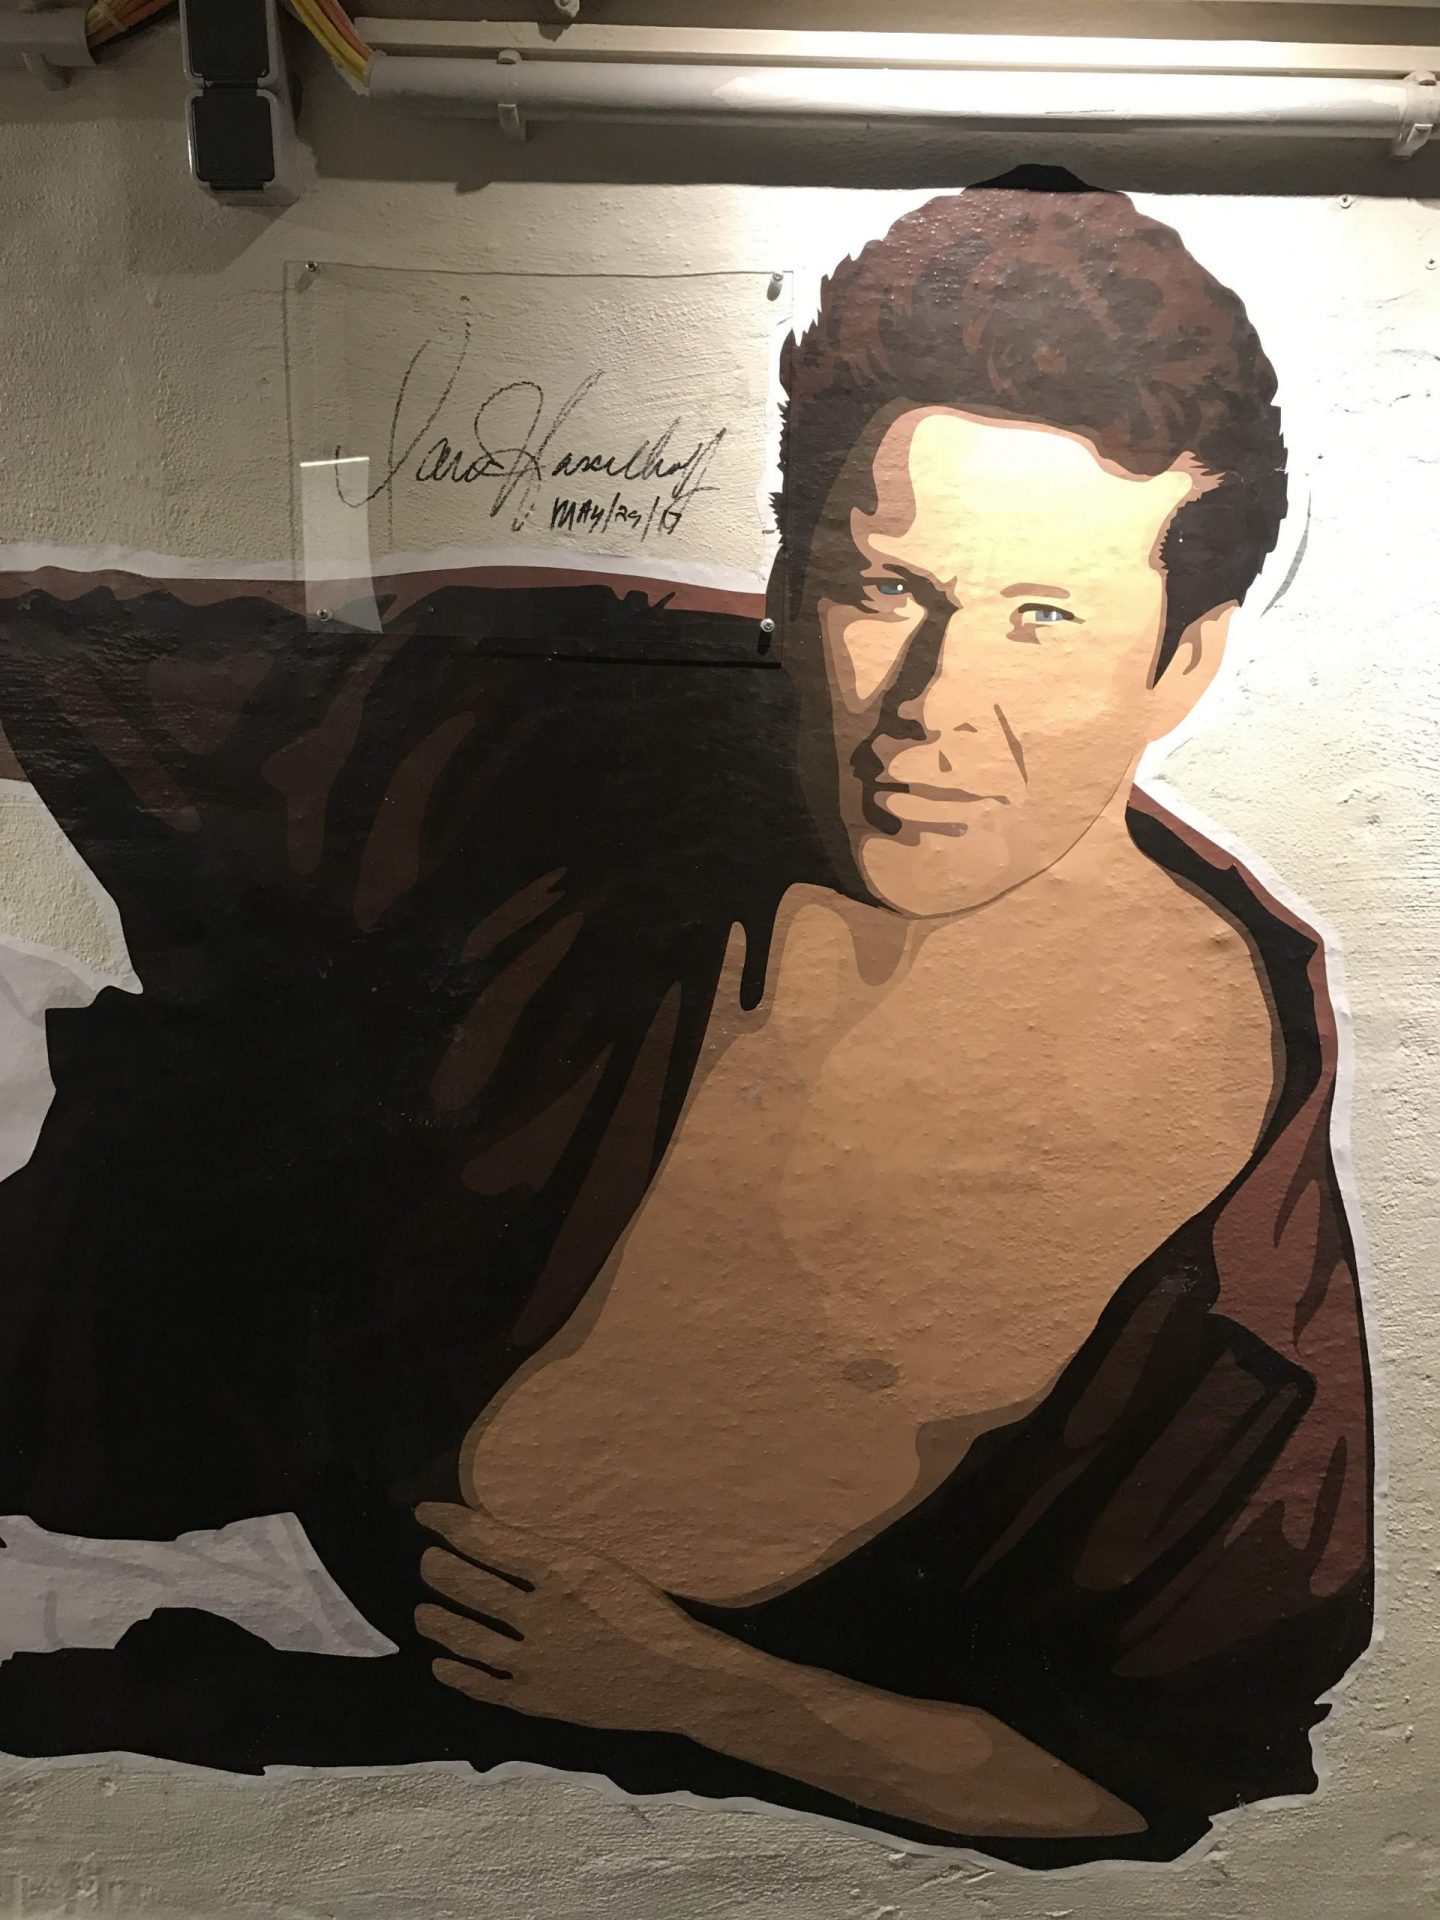 david hasselhoff museum mural scaled - The David Hasselhoff Museum in Berlin, Germany